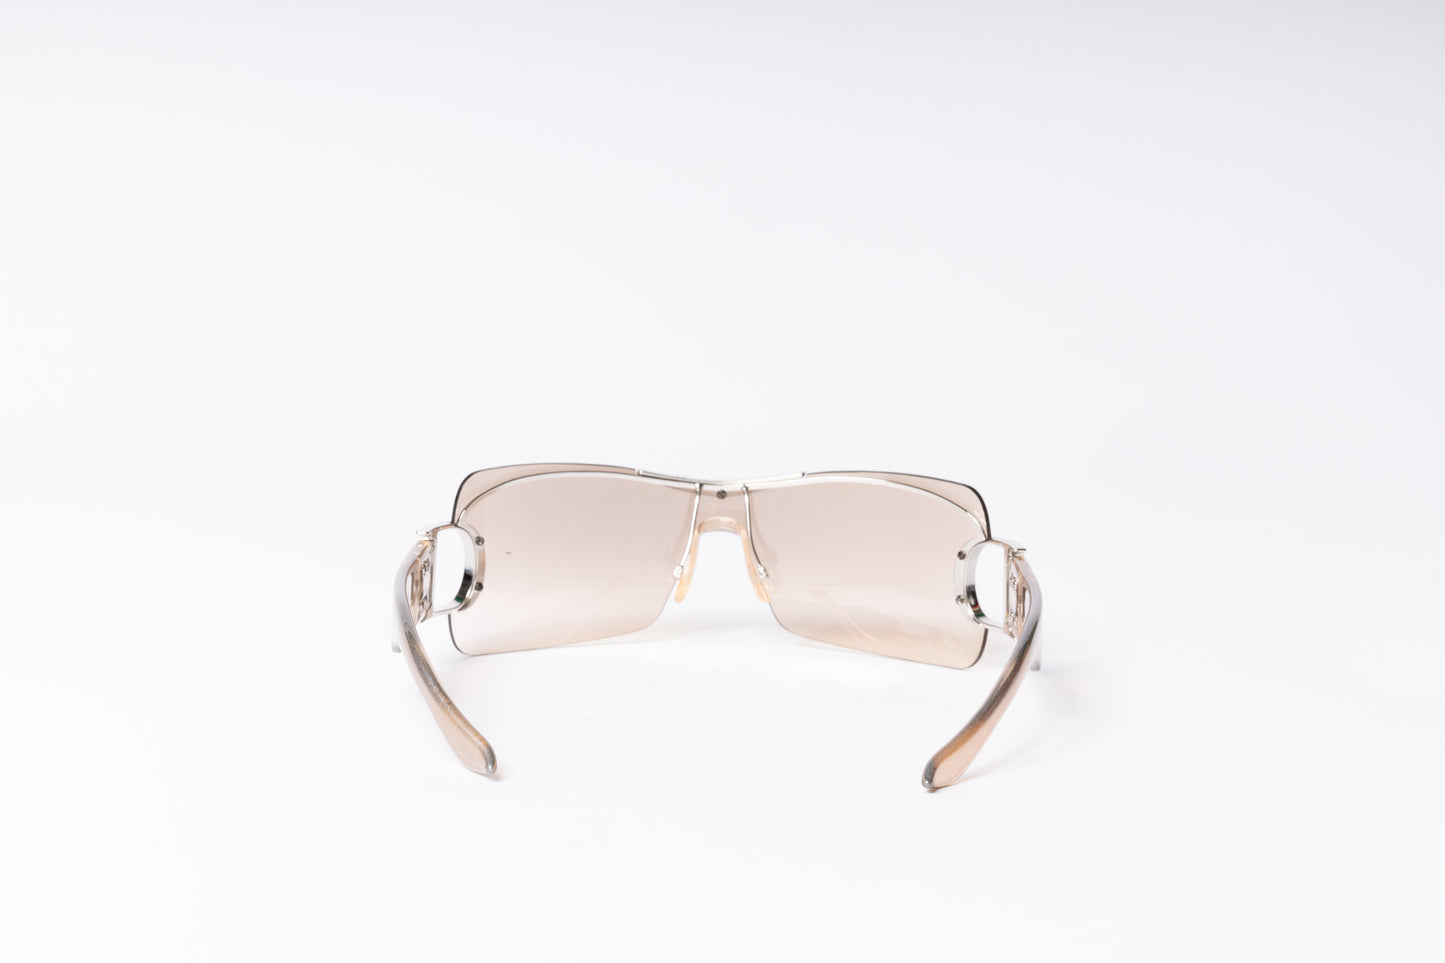 Dior Air Speed Sunglasses